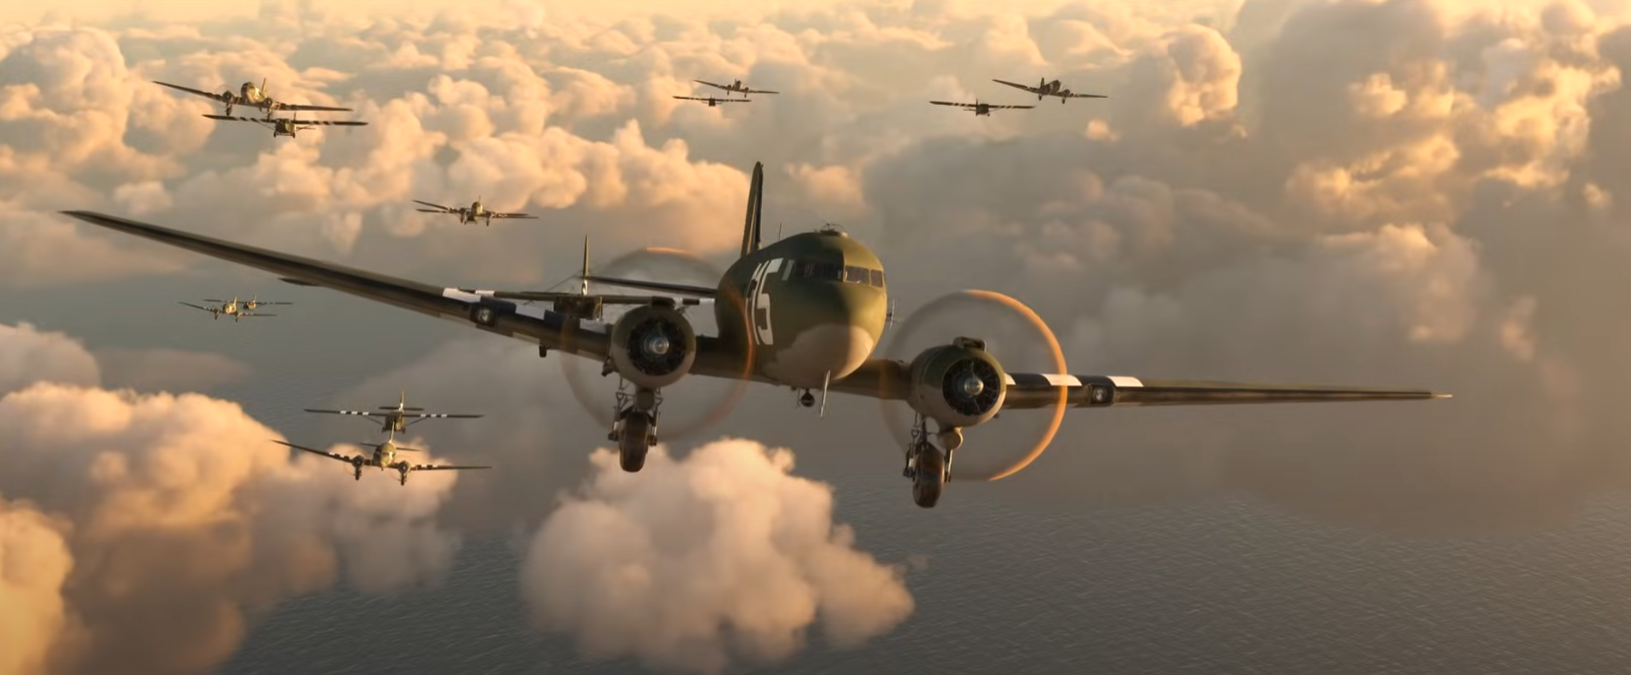 An in-game screenshot from Microsoft Flight Simulator showcasing the C-47 skytrain